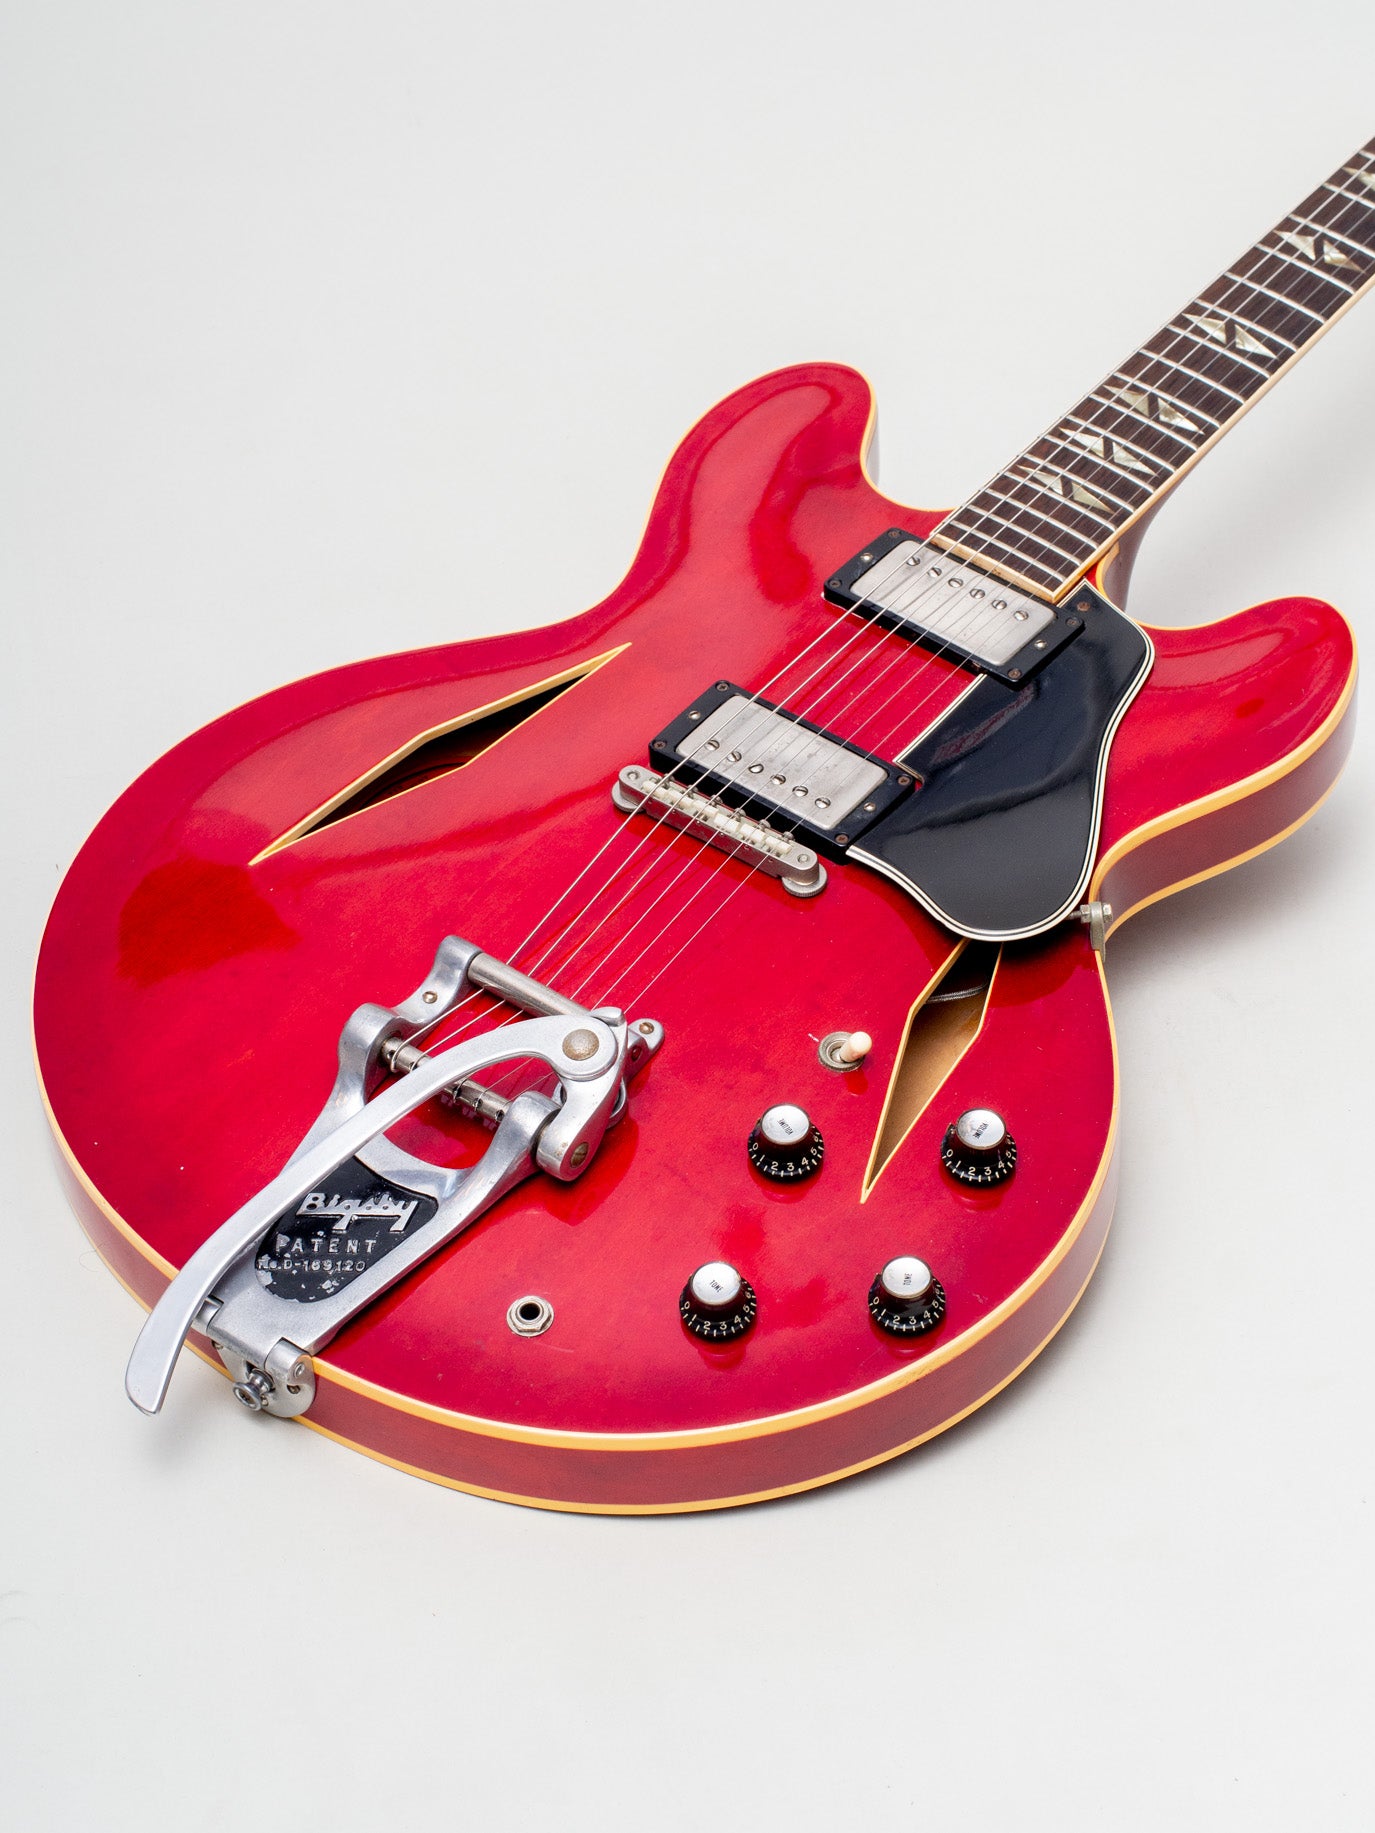 1965 Gibson Trini Lopez Custom